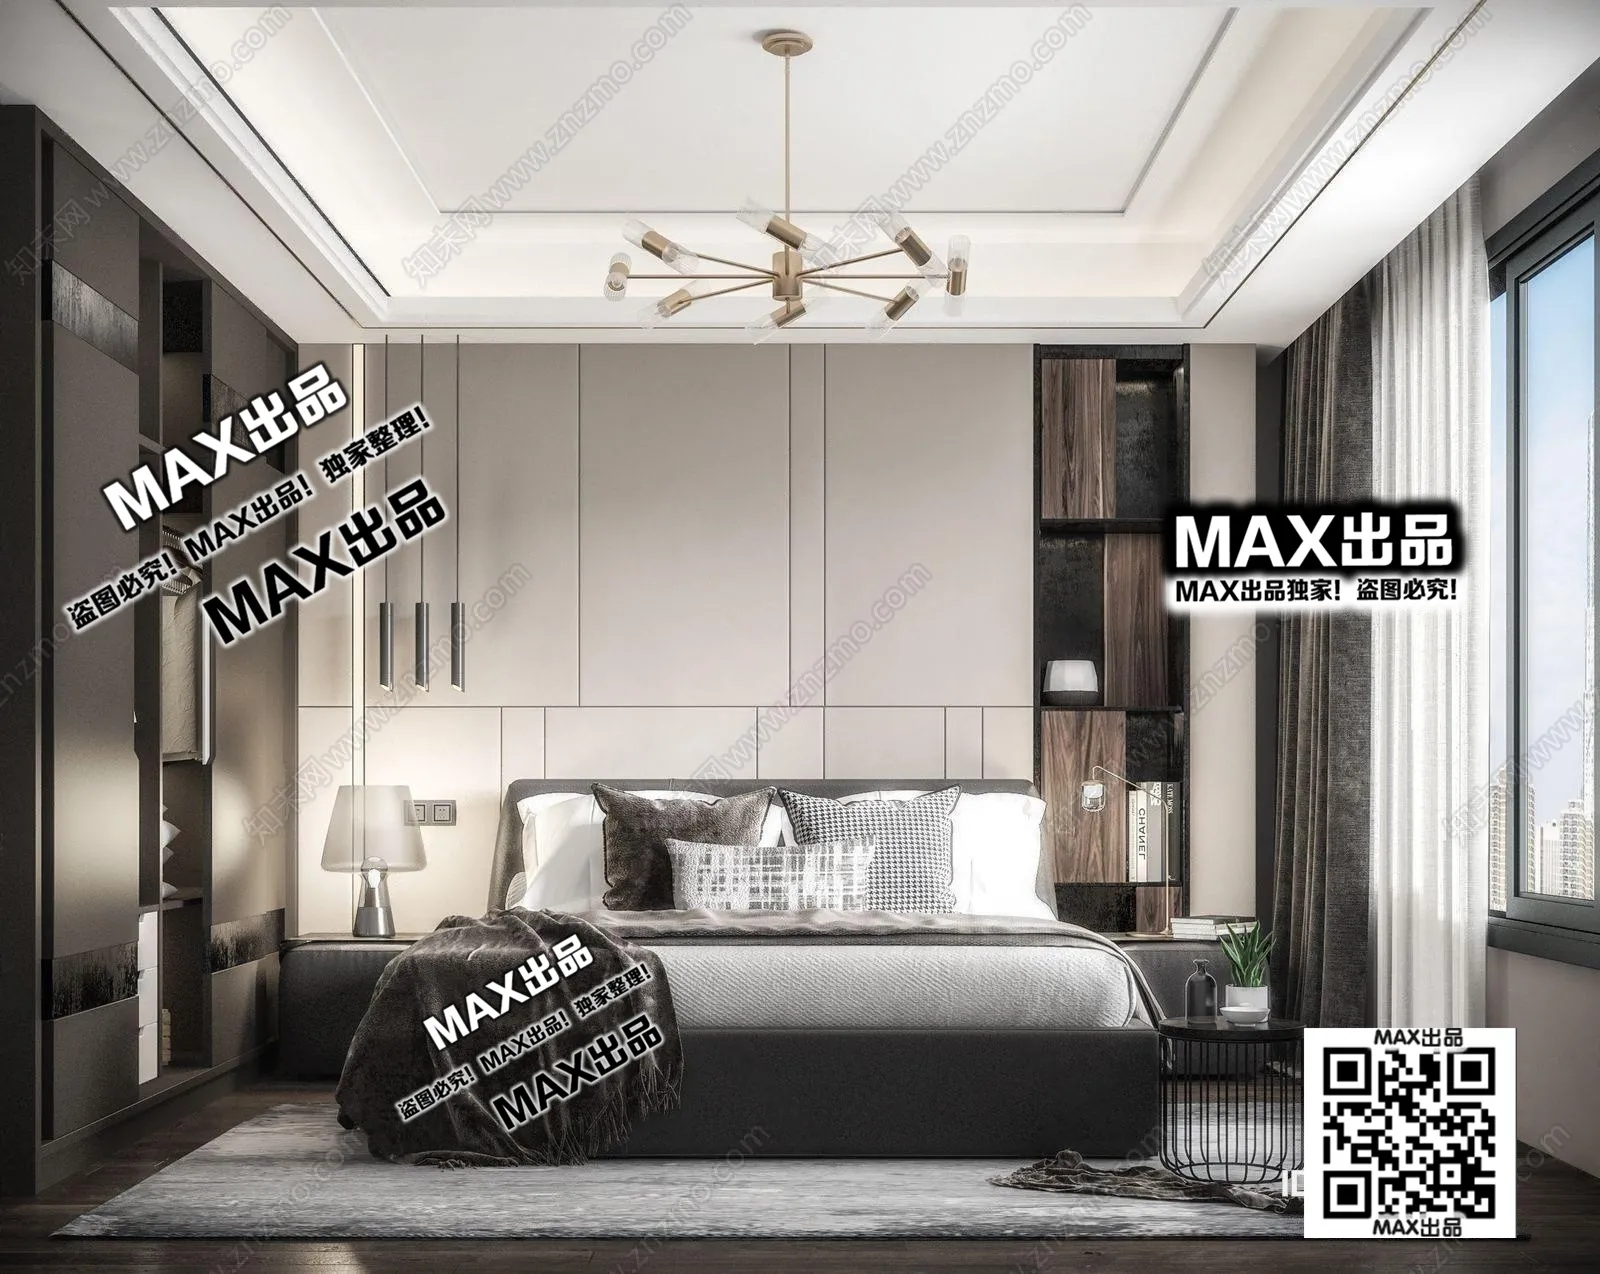 3DS MAX SCENES – LIVING ROOM – 049